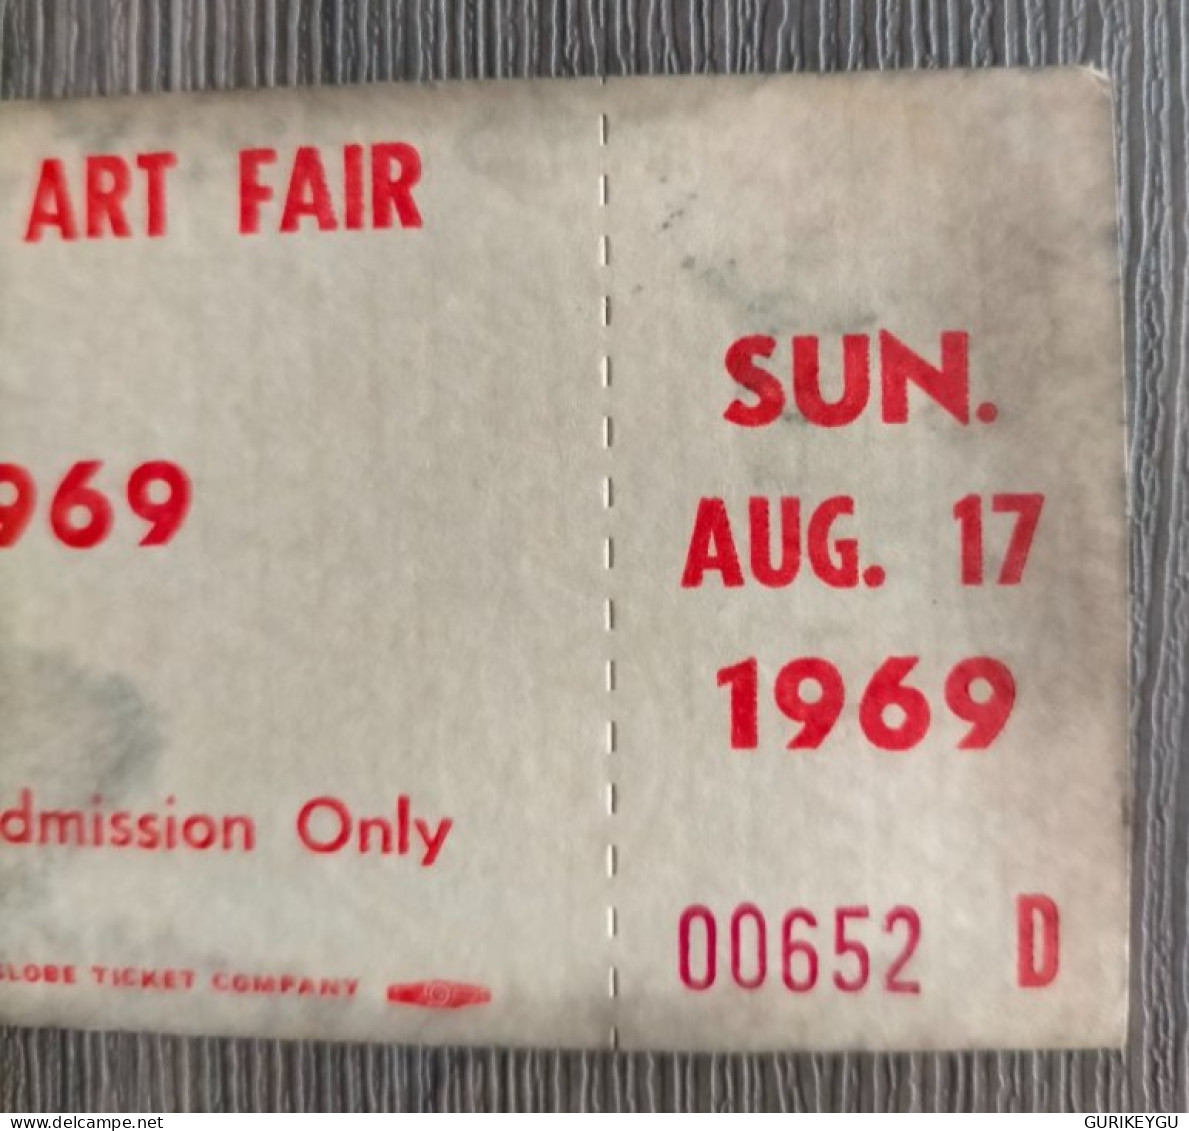 Rarissime Ticket Vintage 17/08/1969 Festival De WOODSTOCK  Music And Art Fair Concert Original N° 00652 D - Tickets De Concerts